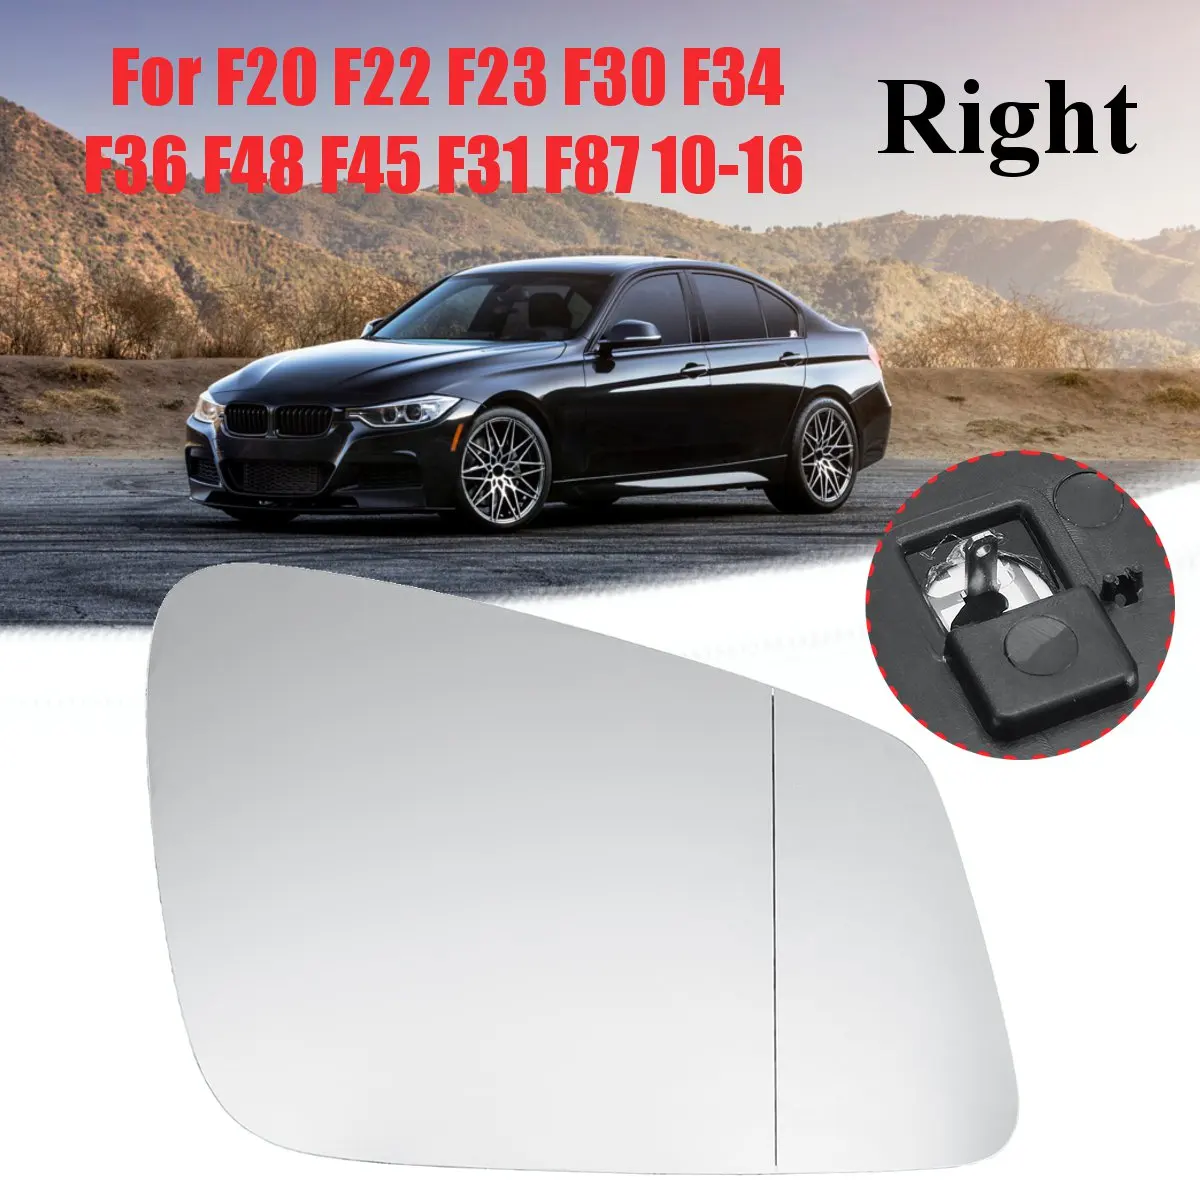 Влево/Вправо Широкий формат зеркало с подогревом Стекло для BMW F20 F22 F23 F30 F34 F36 F48 F45 F31 F87 2010 2011 2012 2013 - Цвет: Right